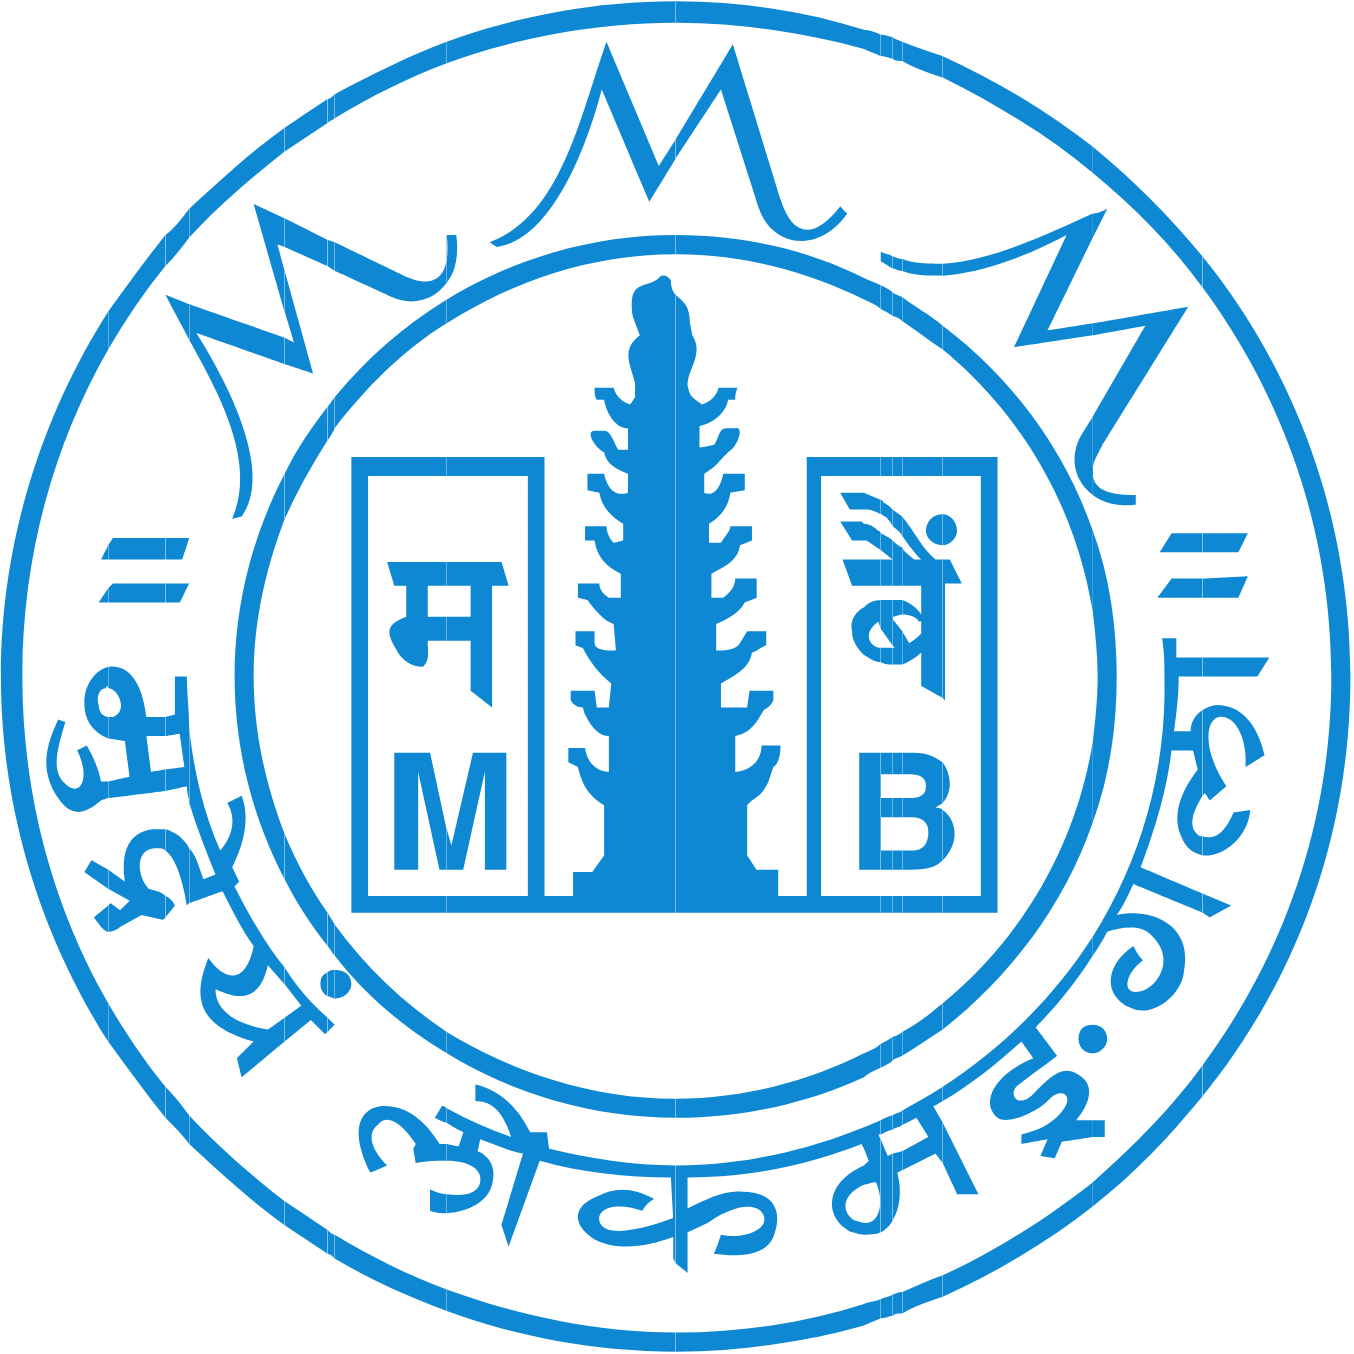 Bank of Maharashtra logo in transparent PNG format